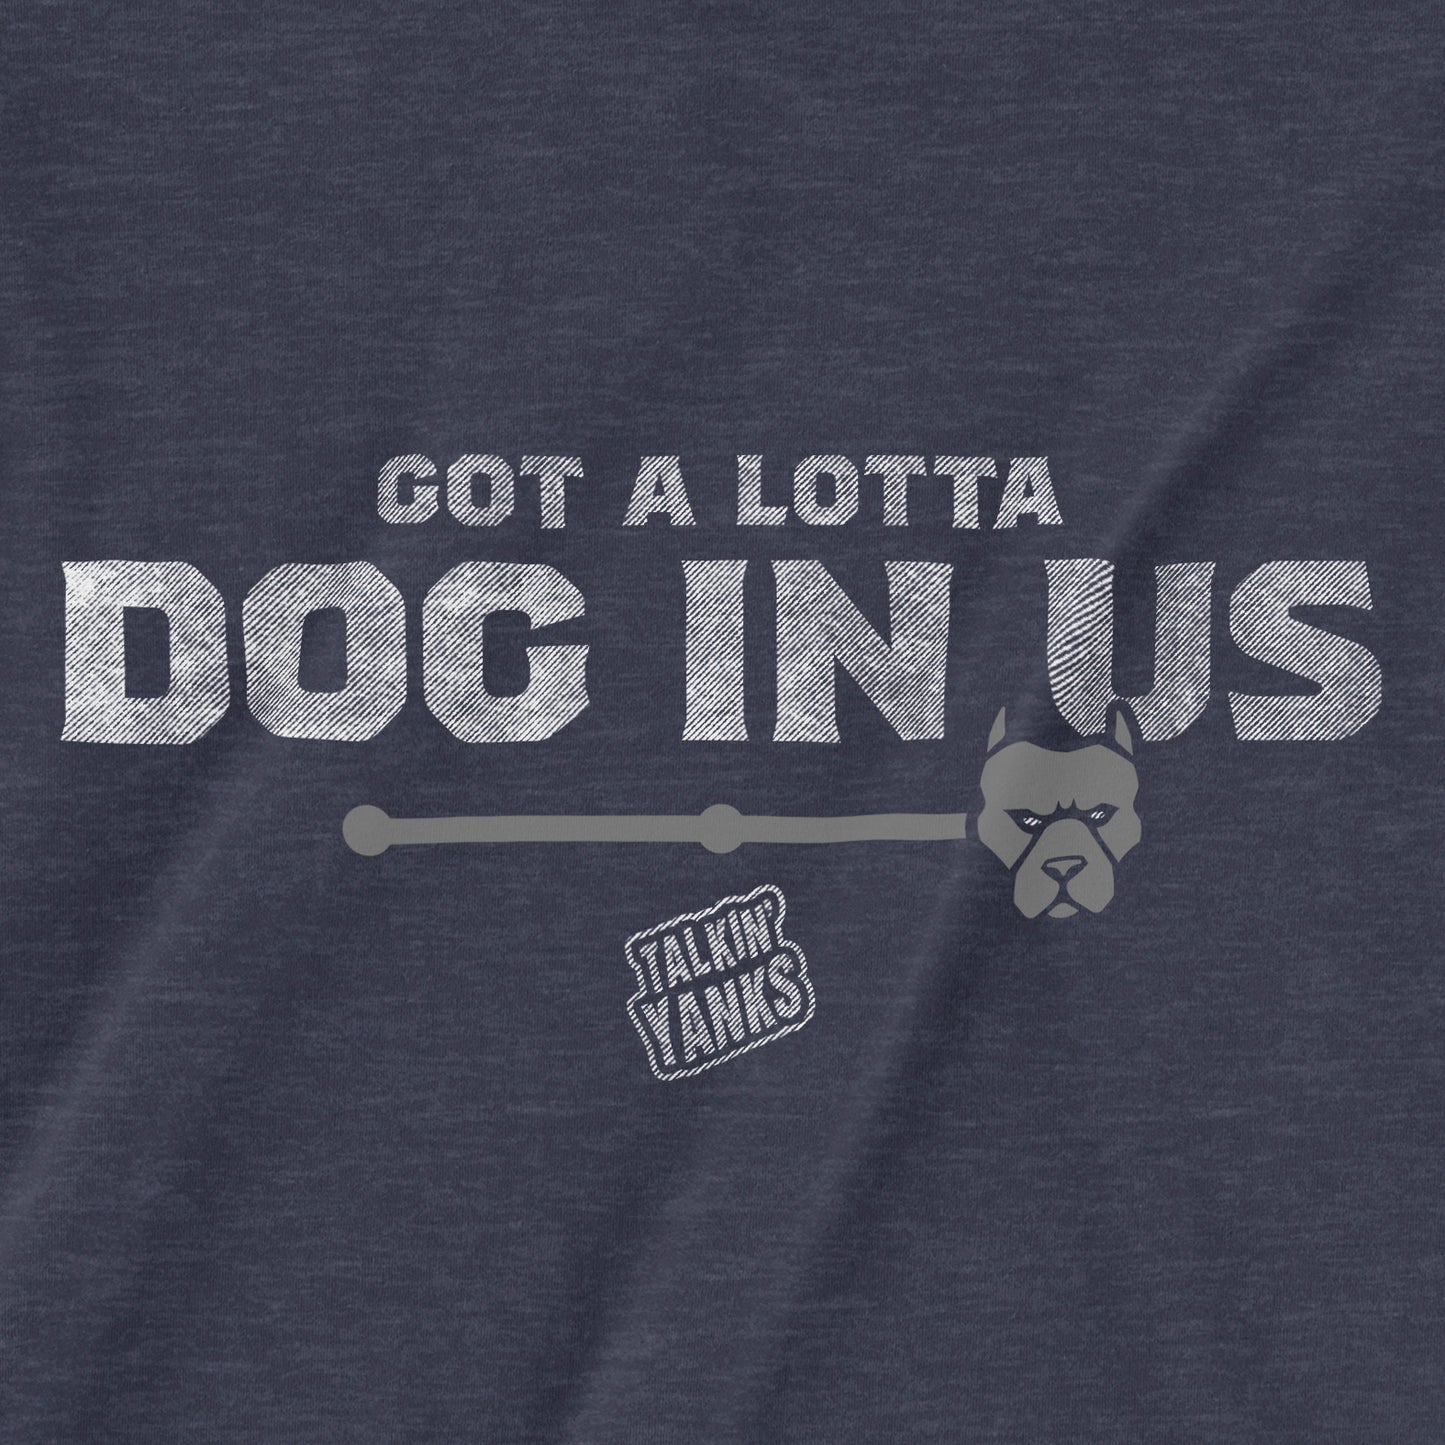 Got A Lotta Dog In Us | T-Shirt